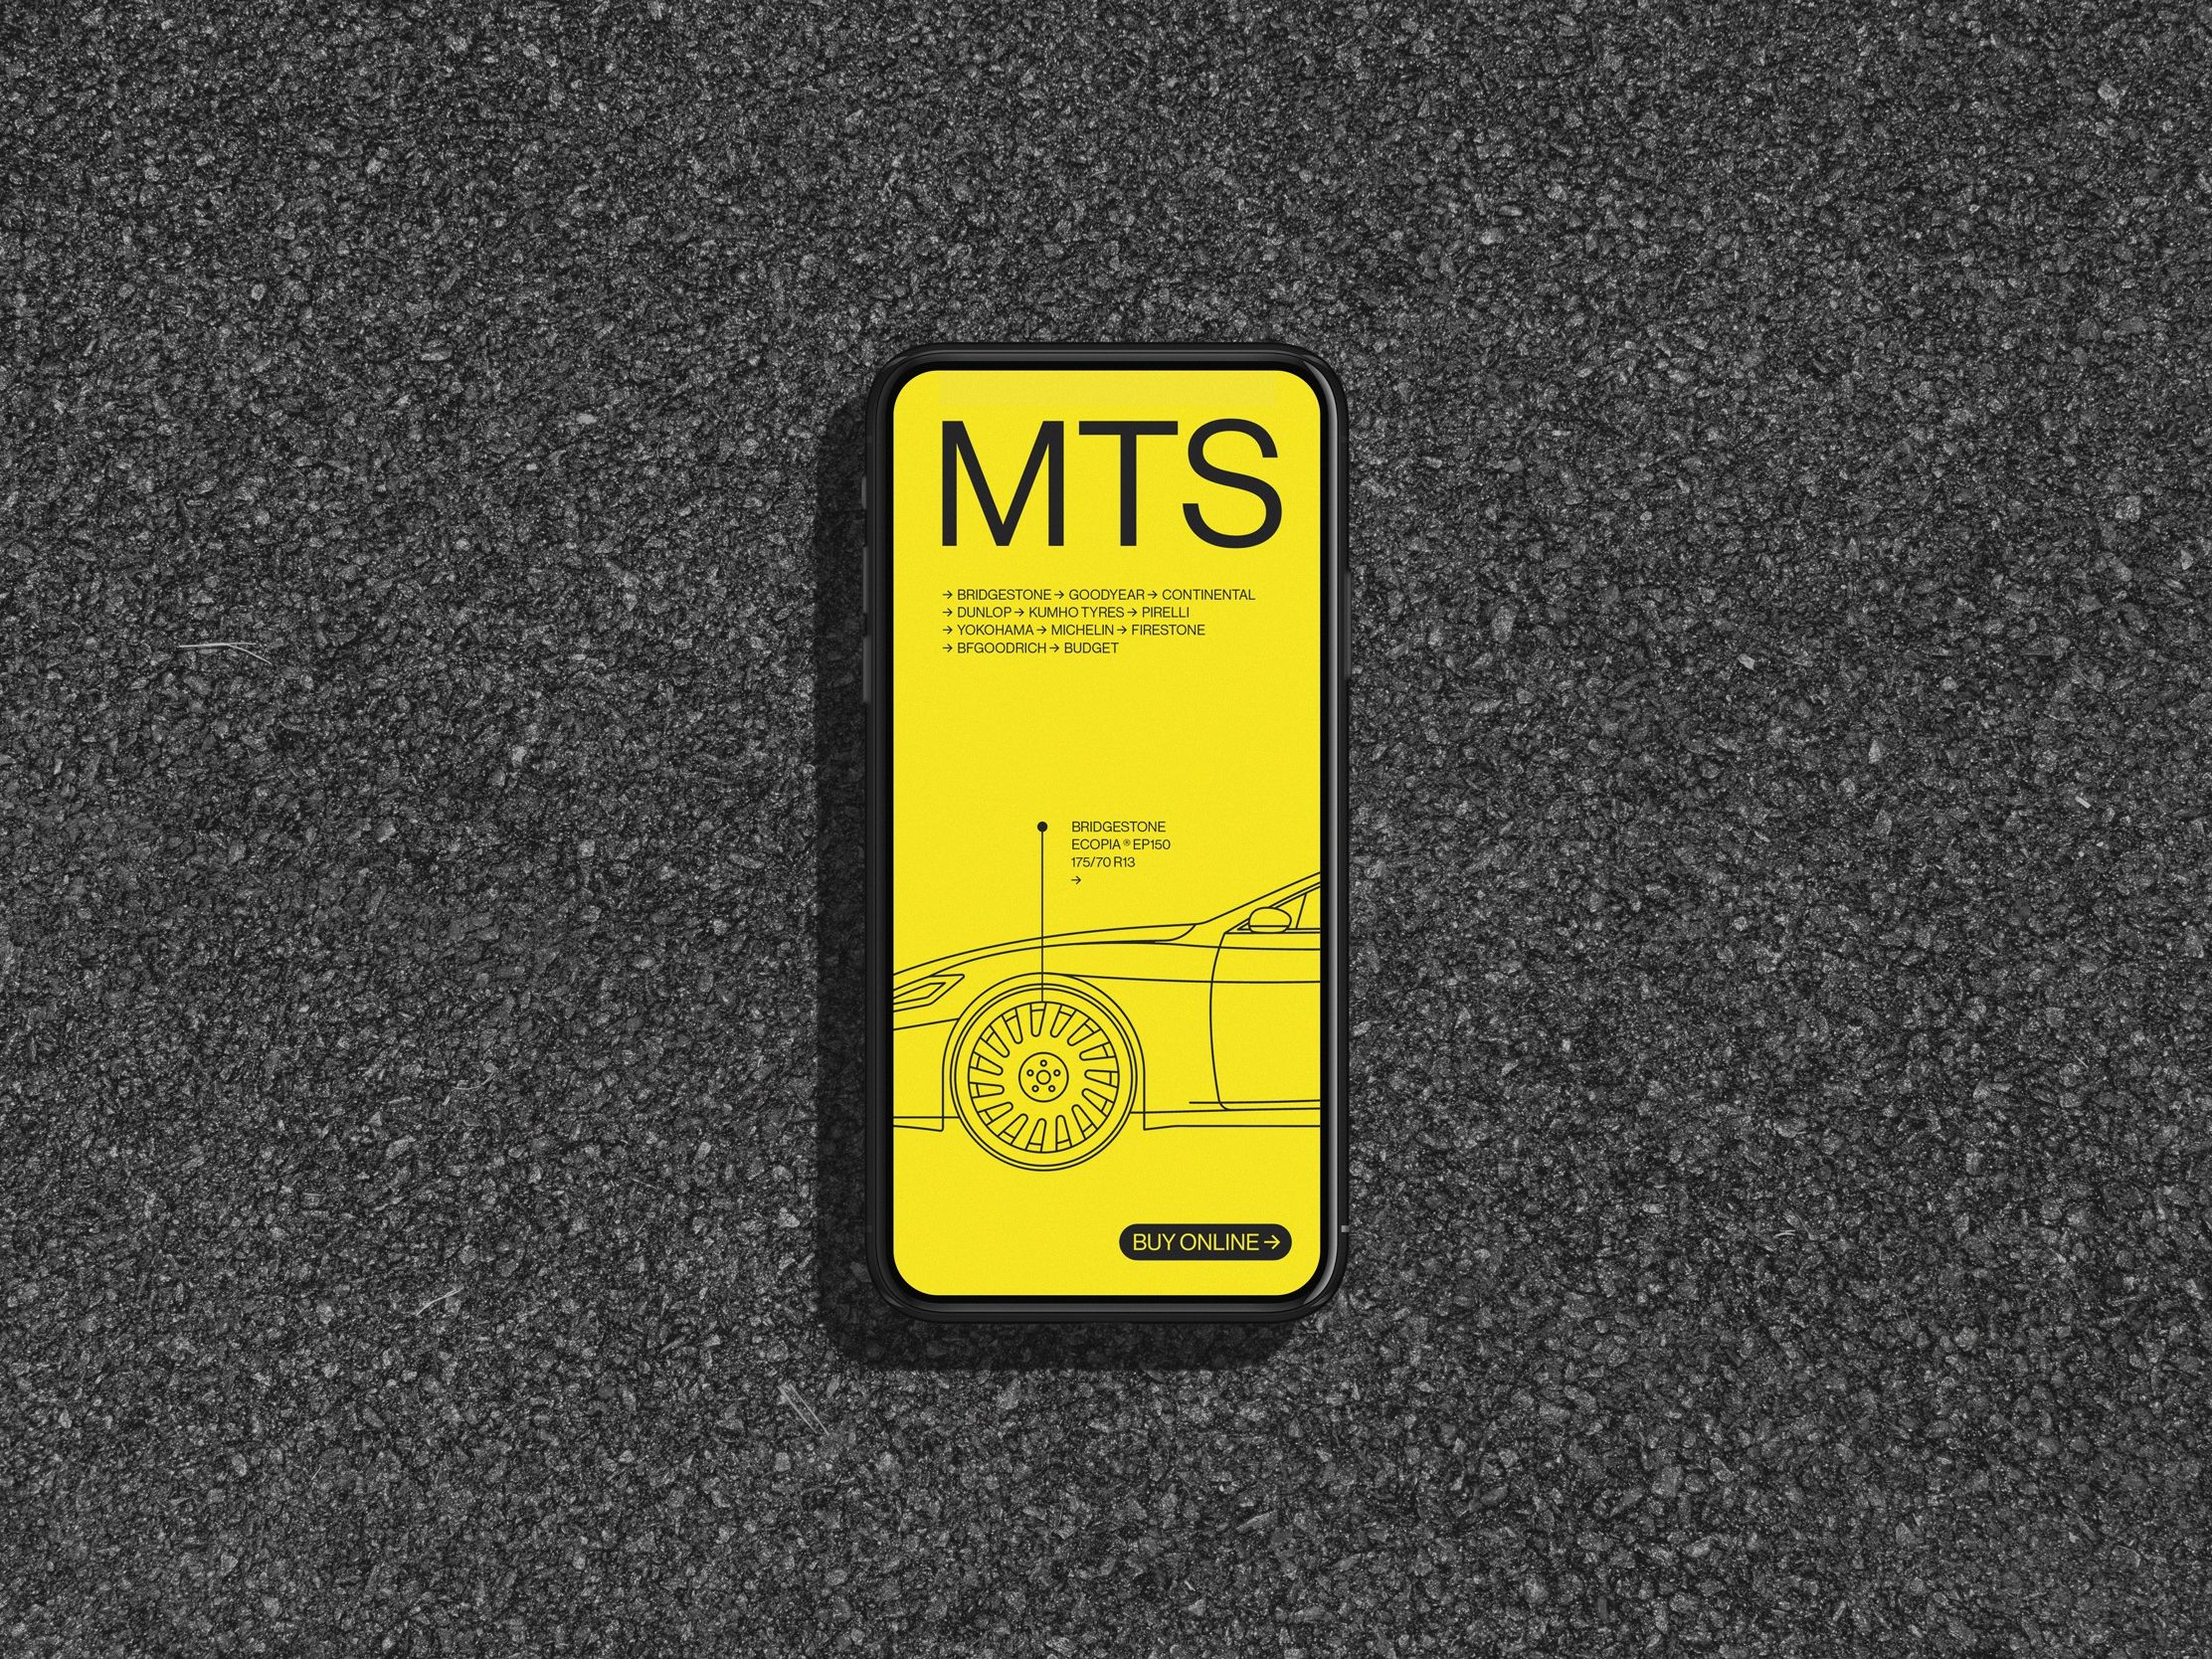 Mts phone